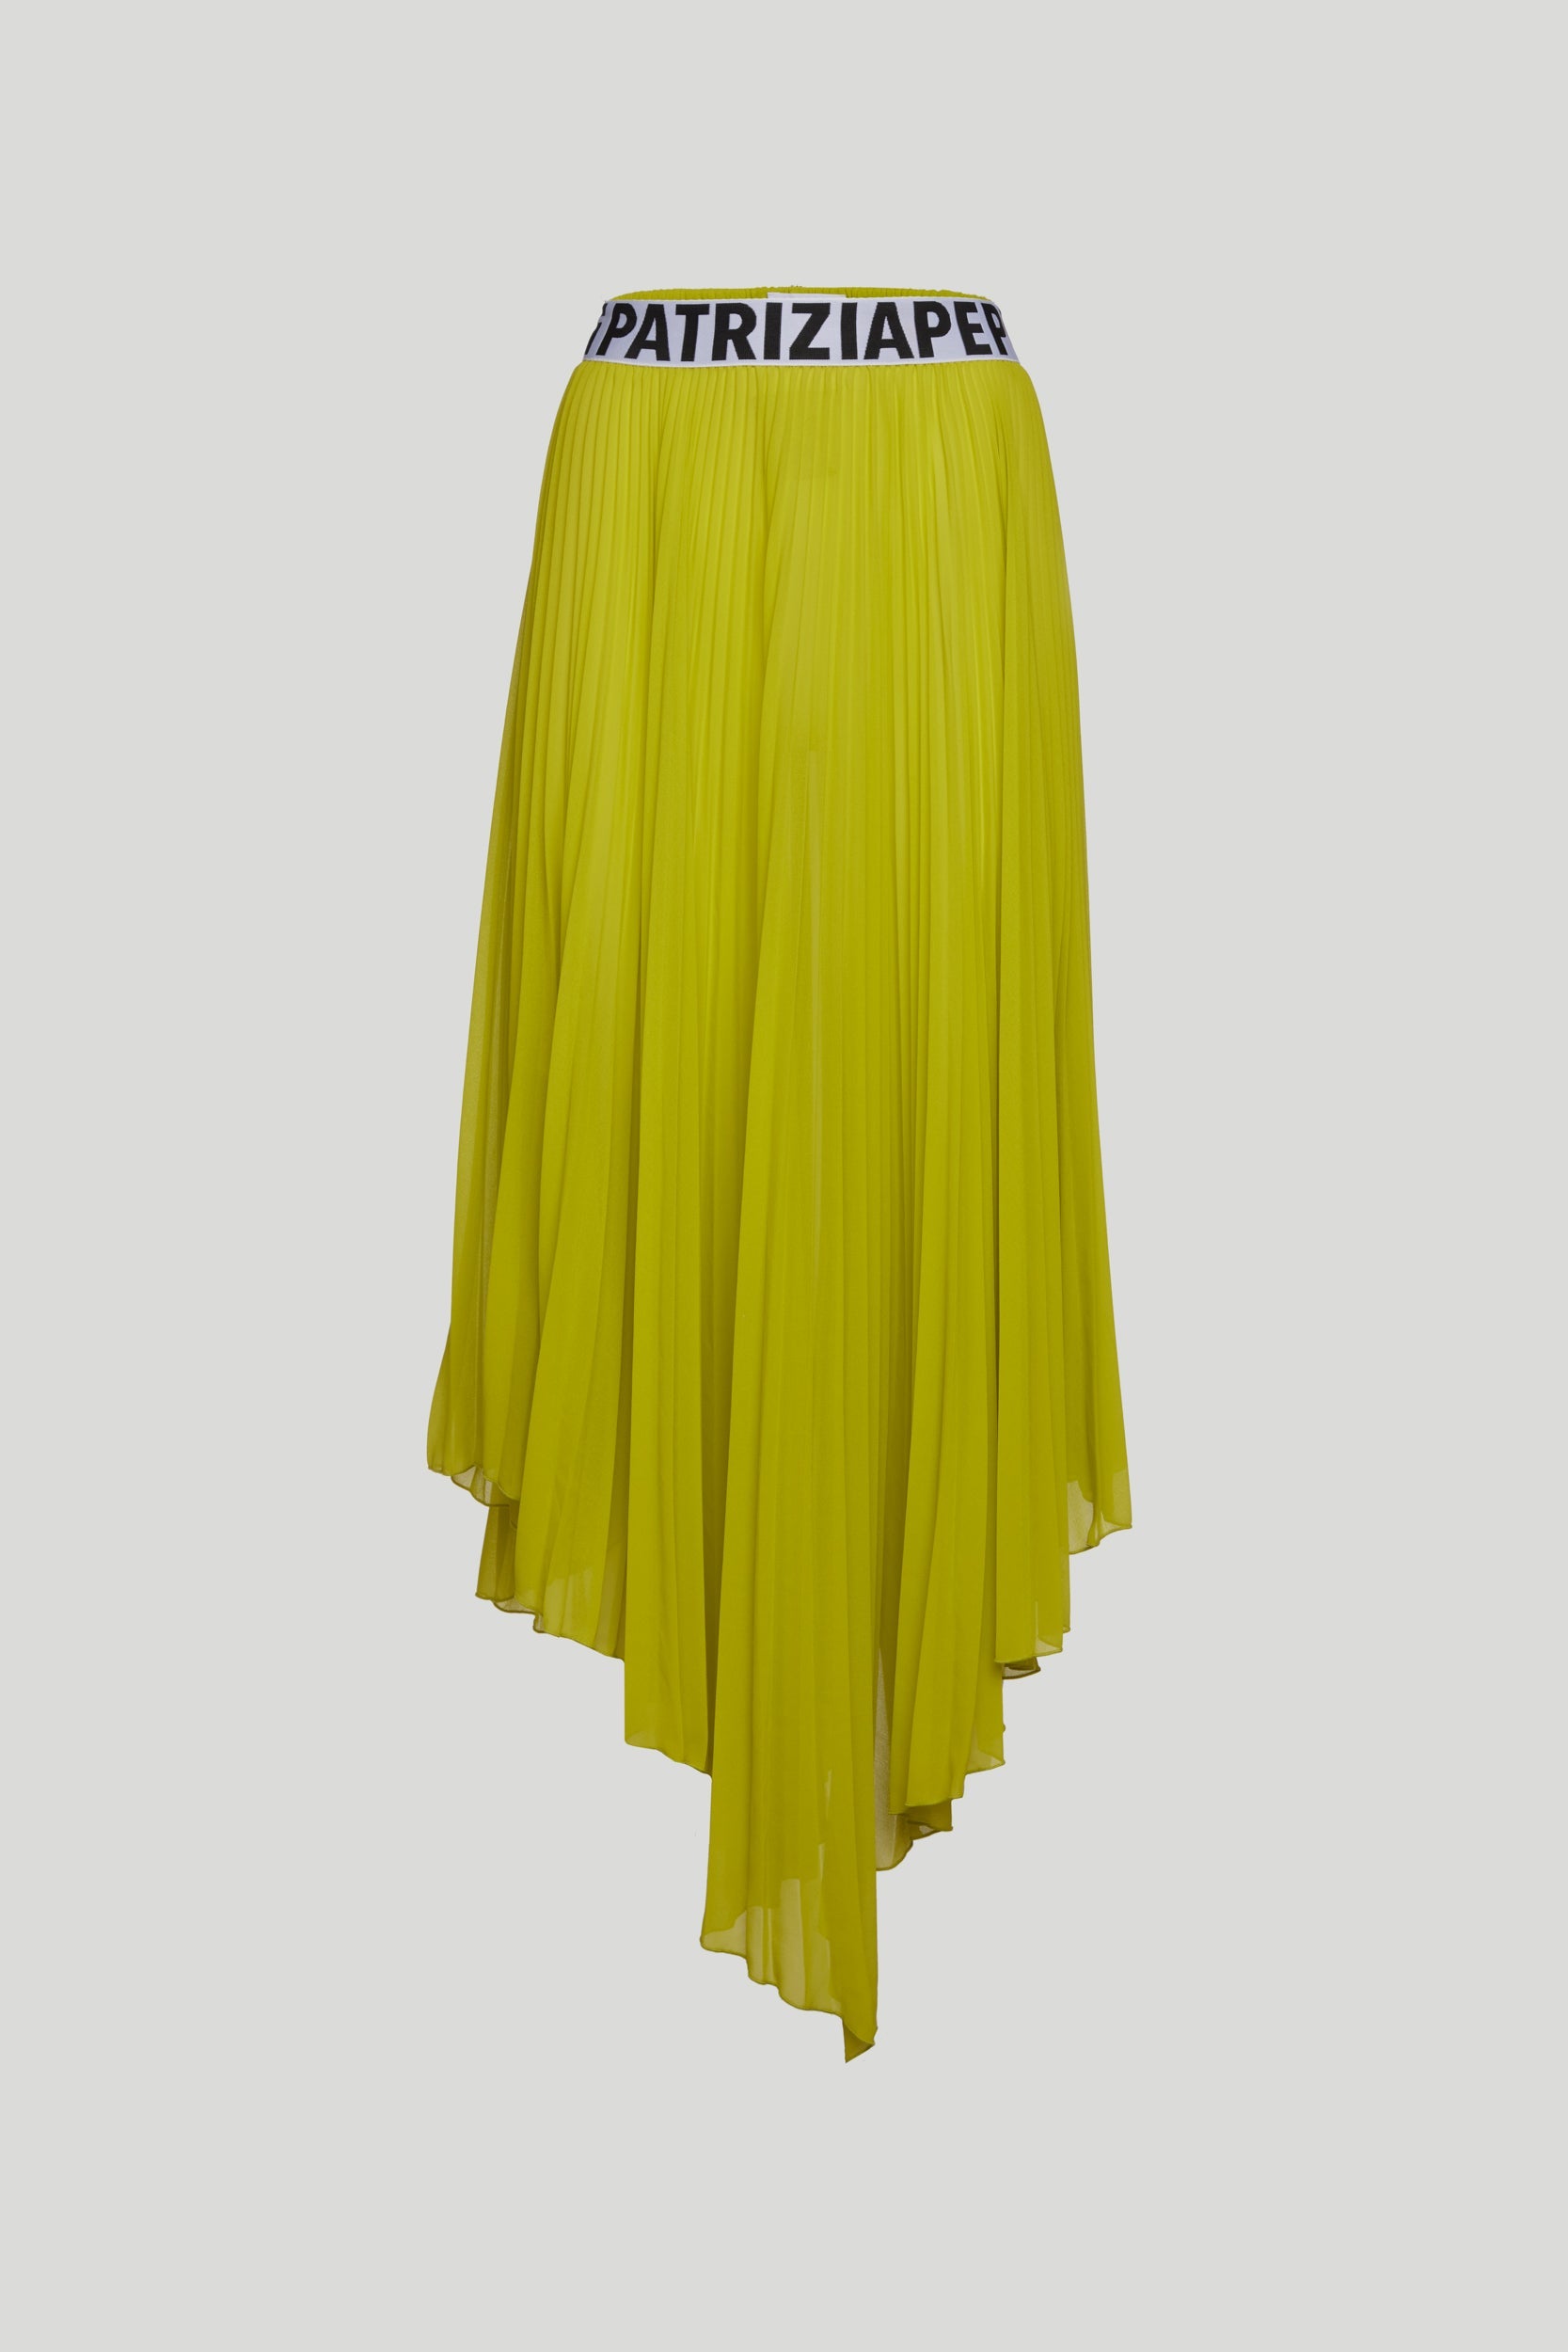 PATRIZIA PEPE Yellow Pleated Skirt